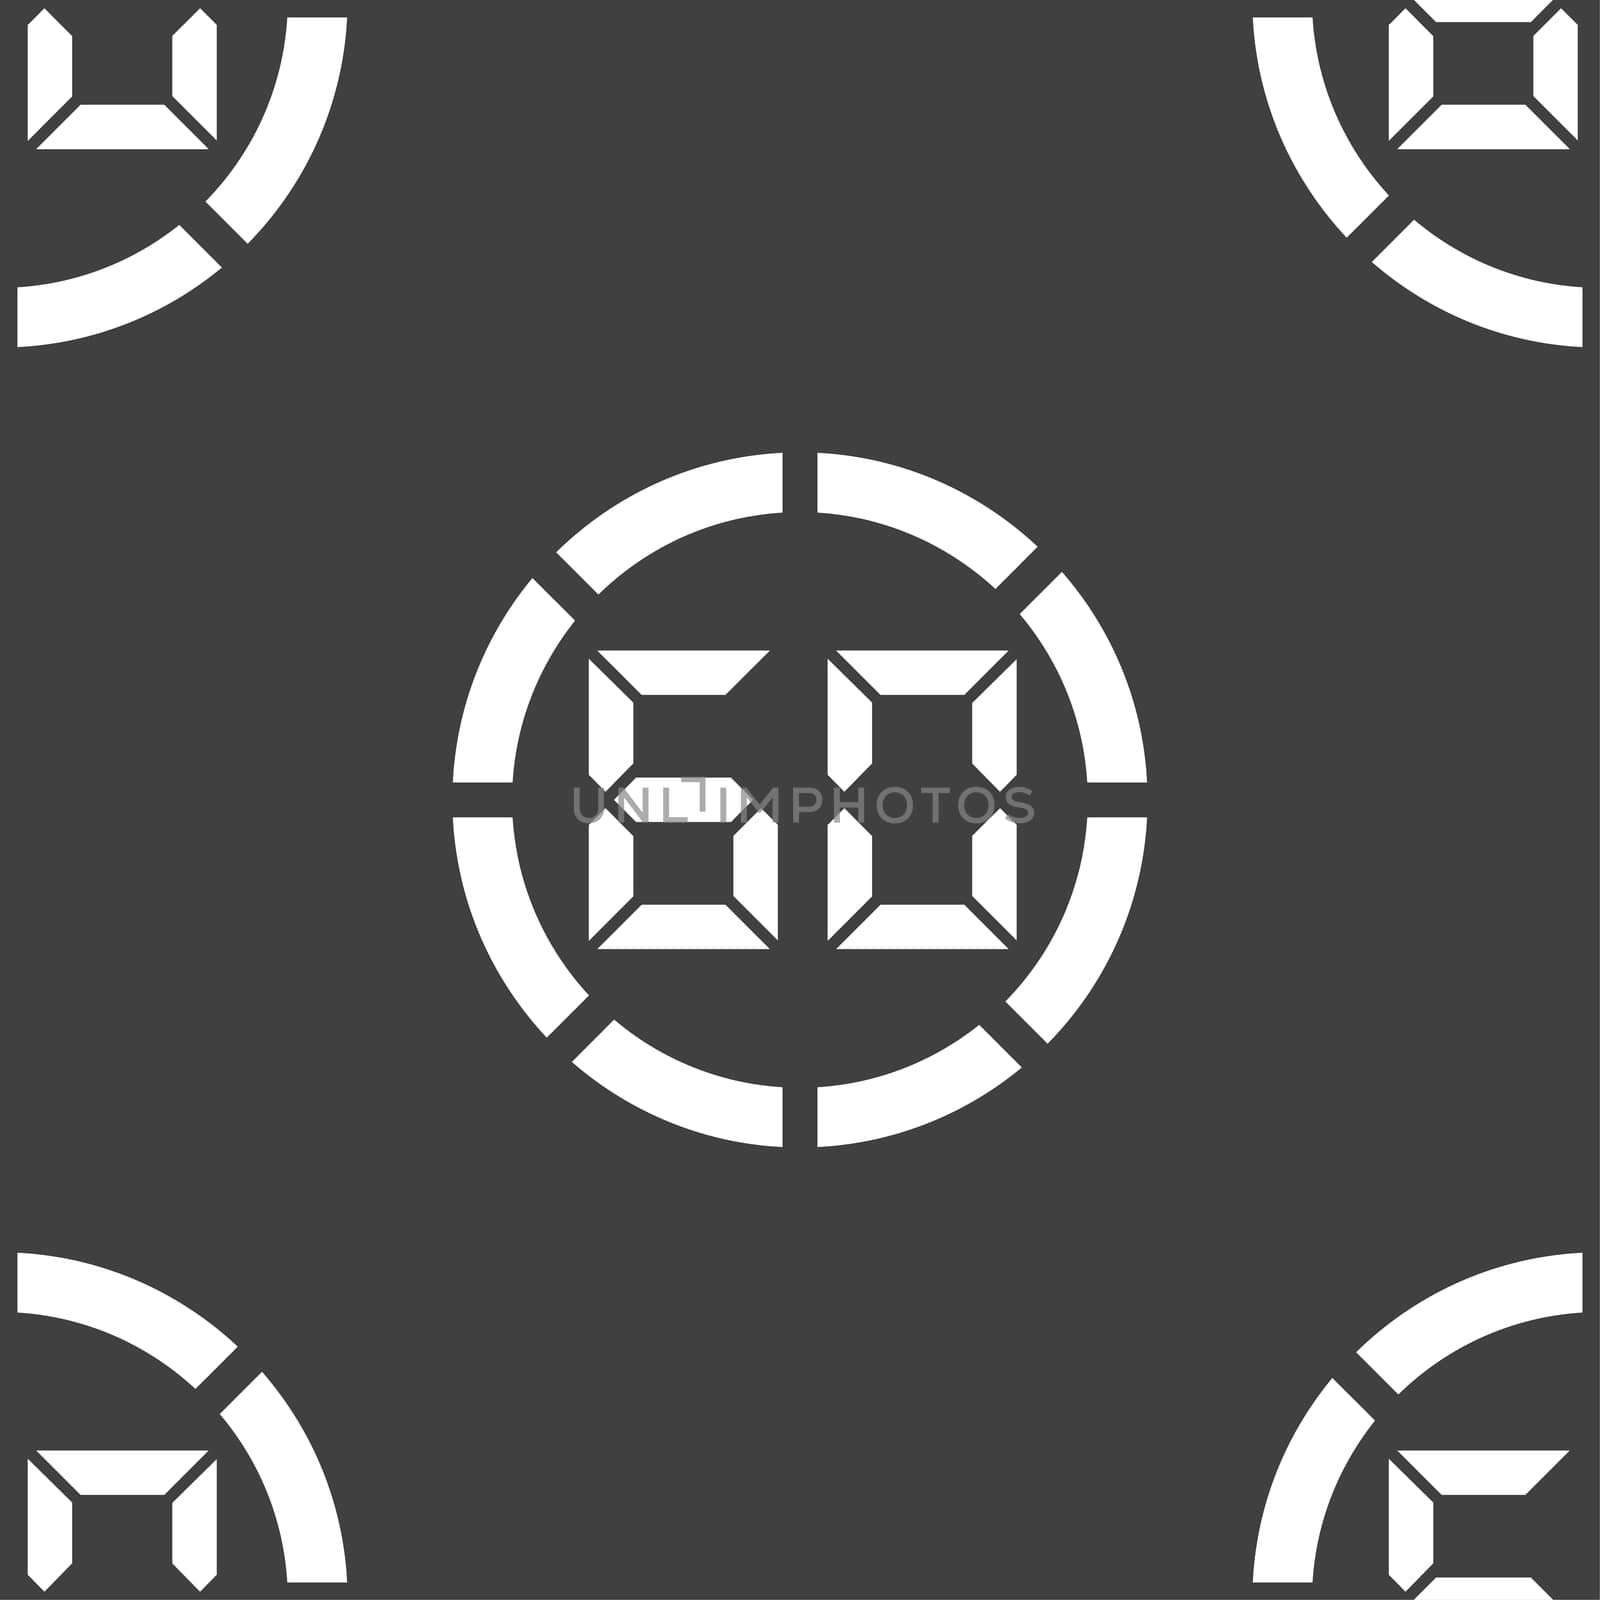 60 second stopwatch icon sign. Seamless pattern on a gray background.  by serhii_lohvyniuk